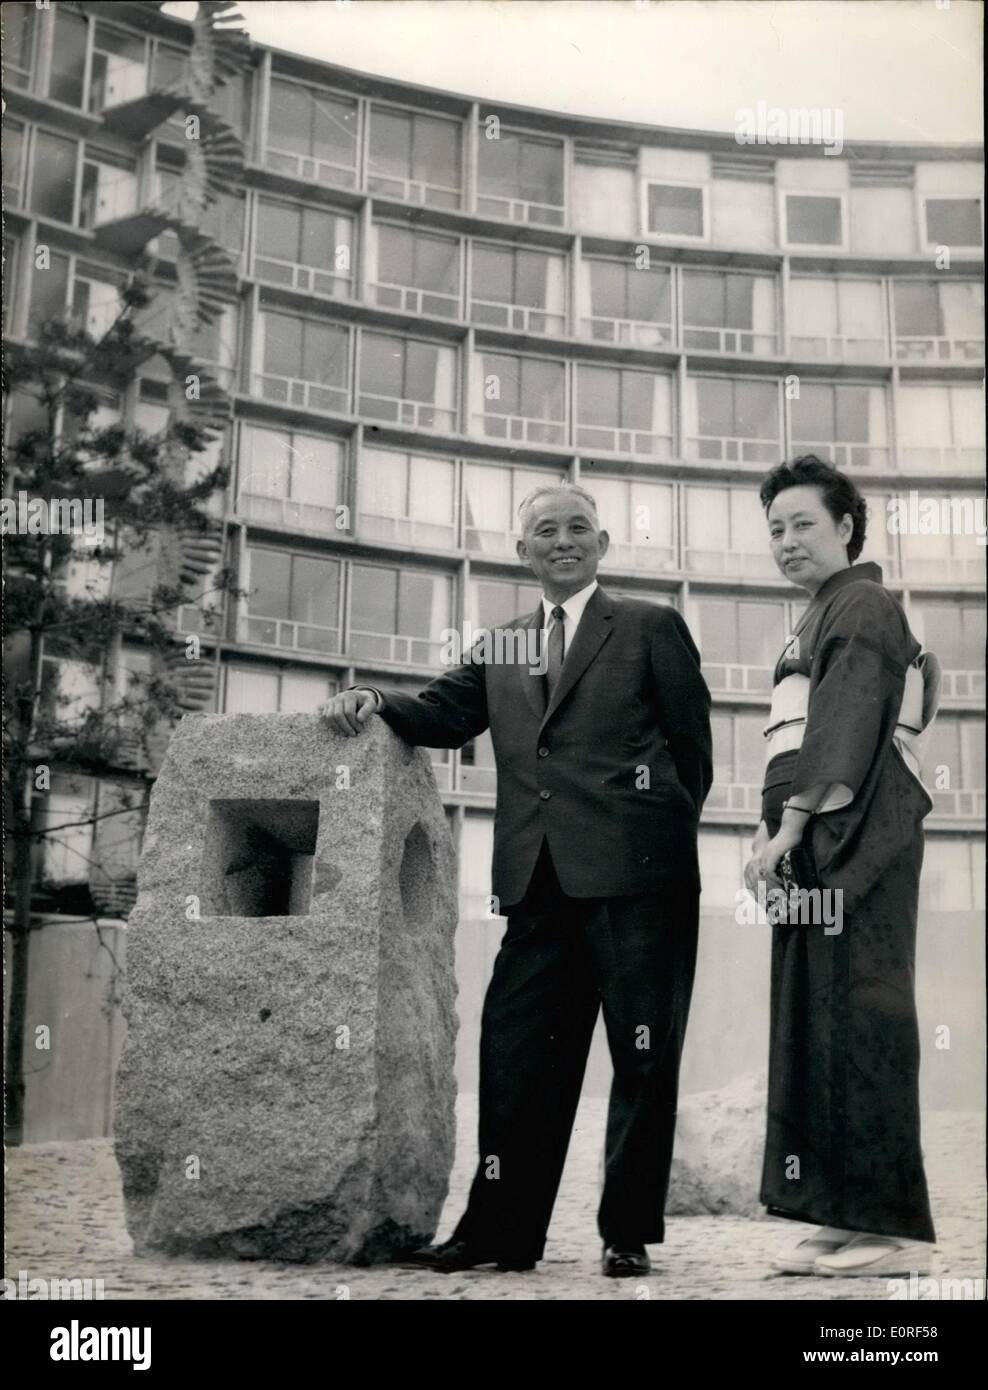 May 05, 1959 - Kyoto Mayor Visits Paris: Gizo Takayama, Mayor Of Kyoto (Japan) Is Now Visiting Paris With His Wife. Photo shows Stock Photo